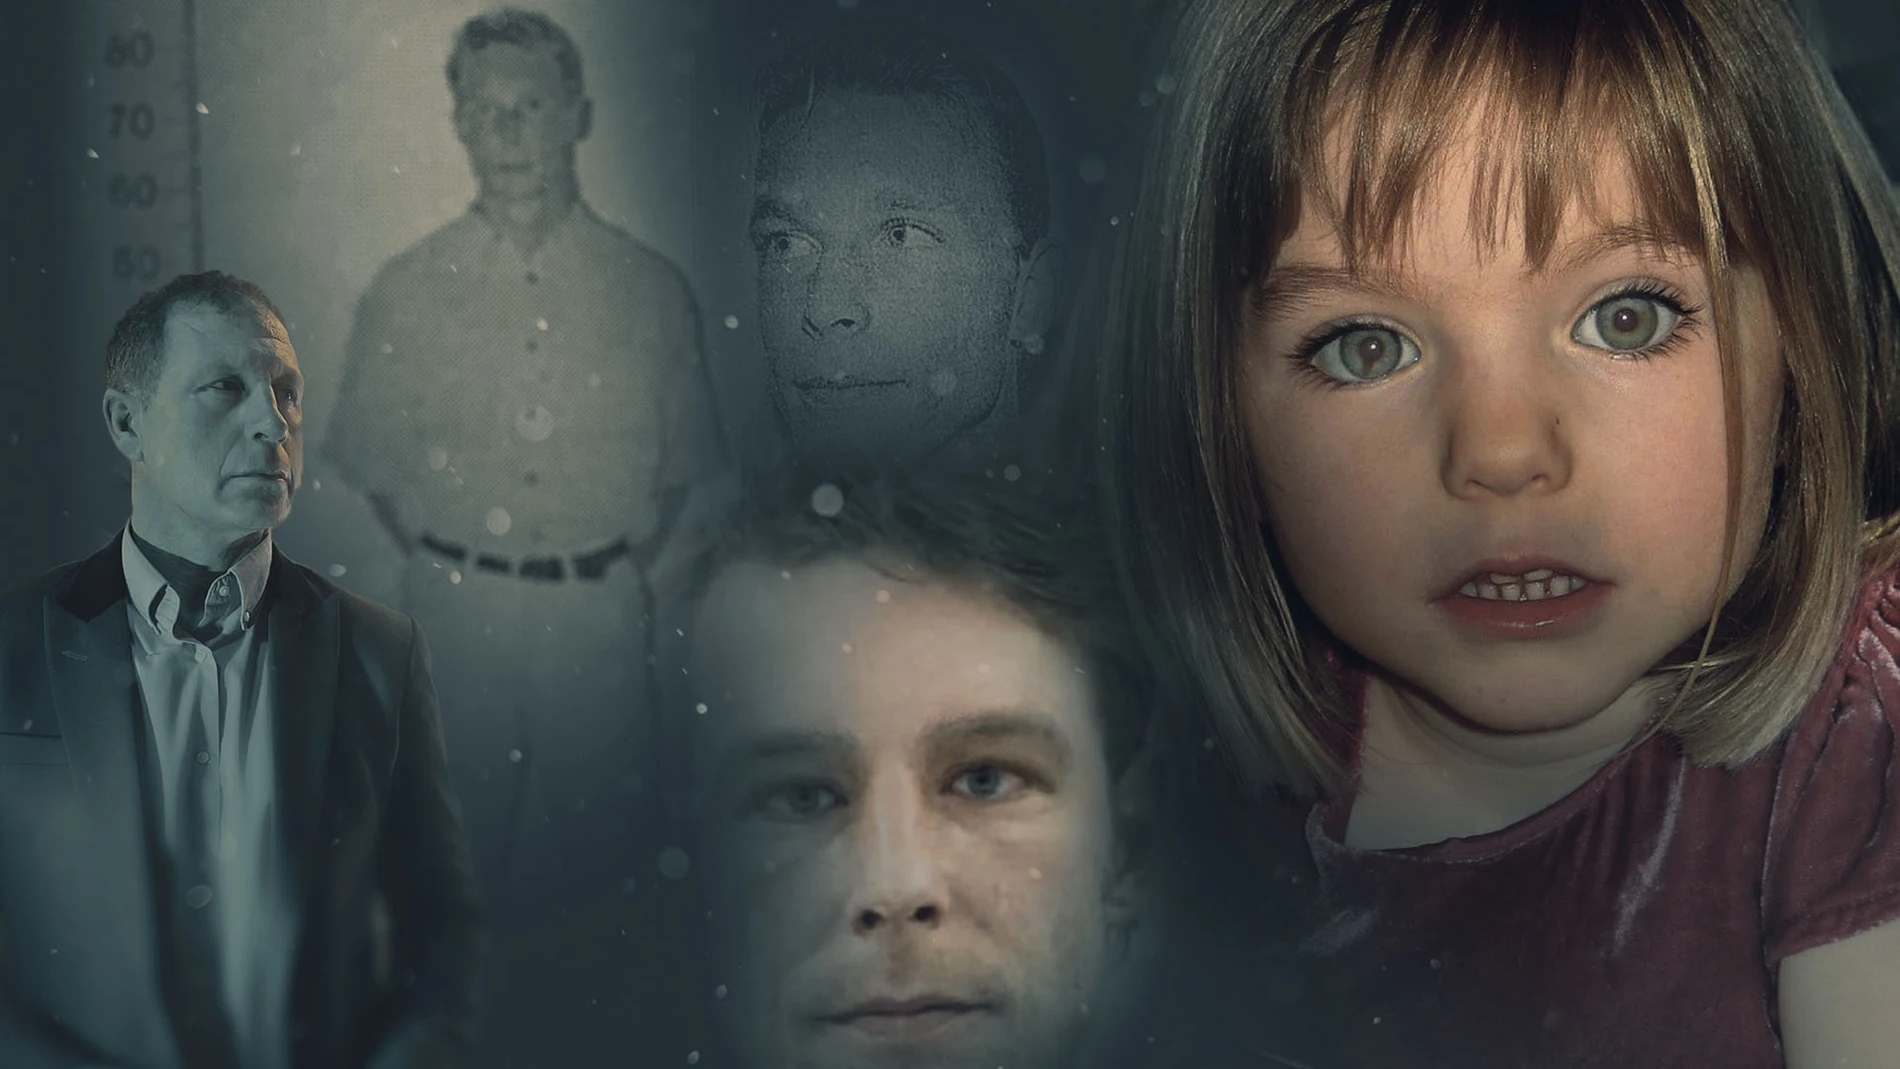 Cartel promocional de la serie documental de AMC Crime "Madeleine McCann: Principal sospechoso"